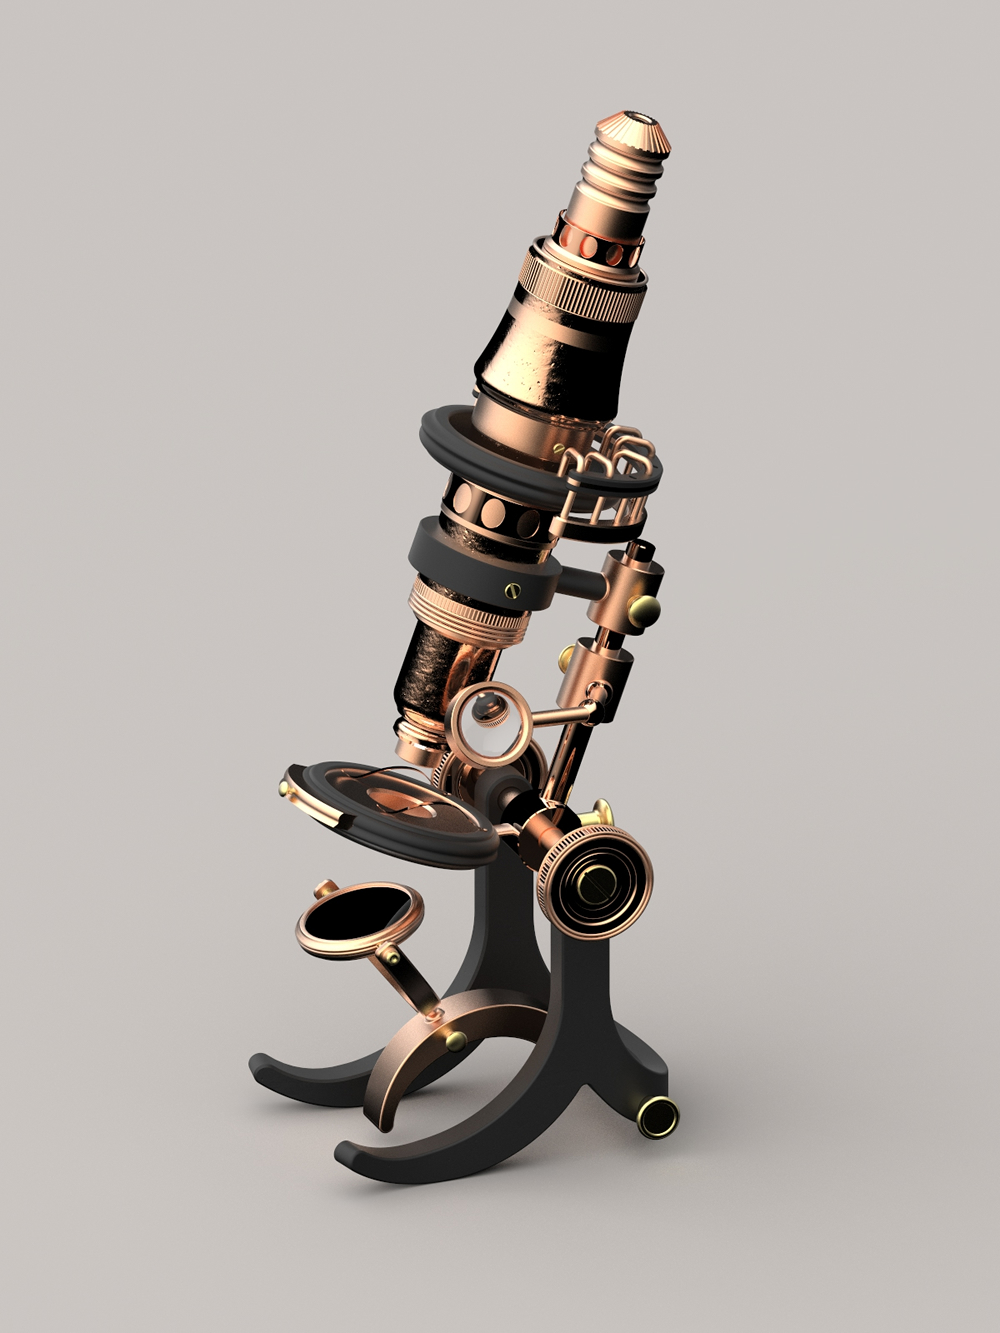 microscope 3D antique STEAMPUNK fantasy ILLUSTRATION  3d render concept